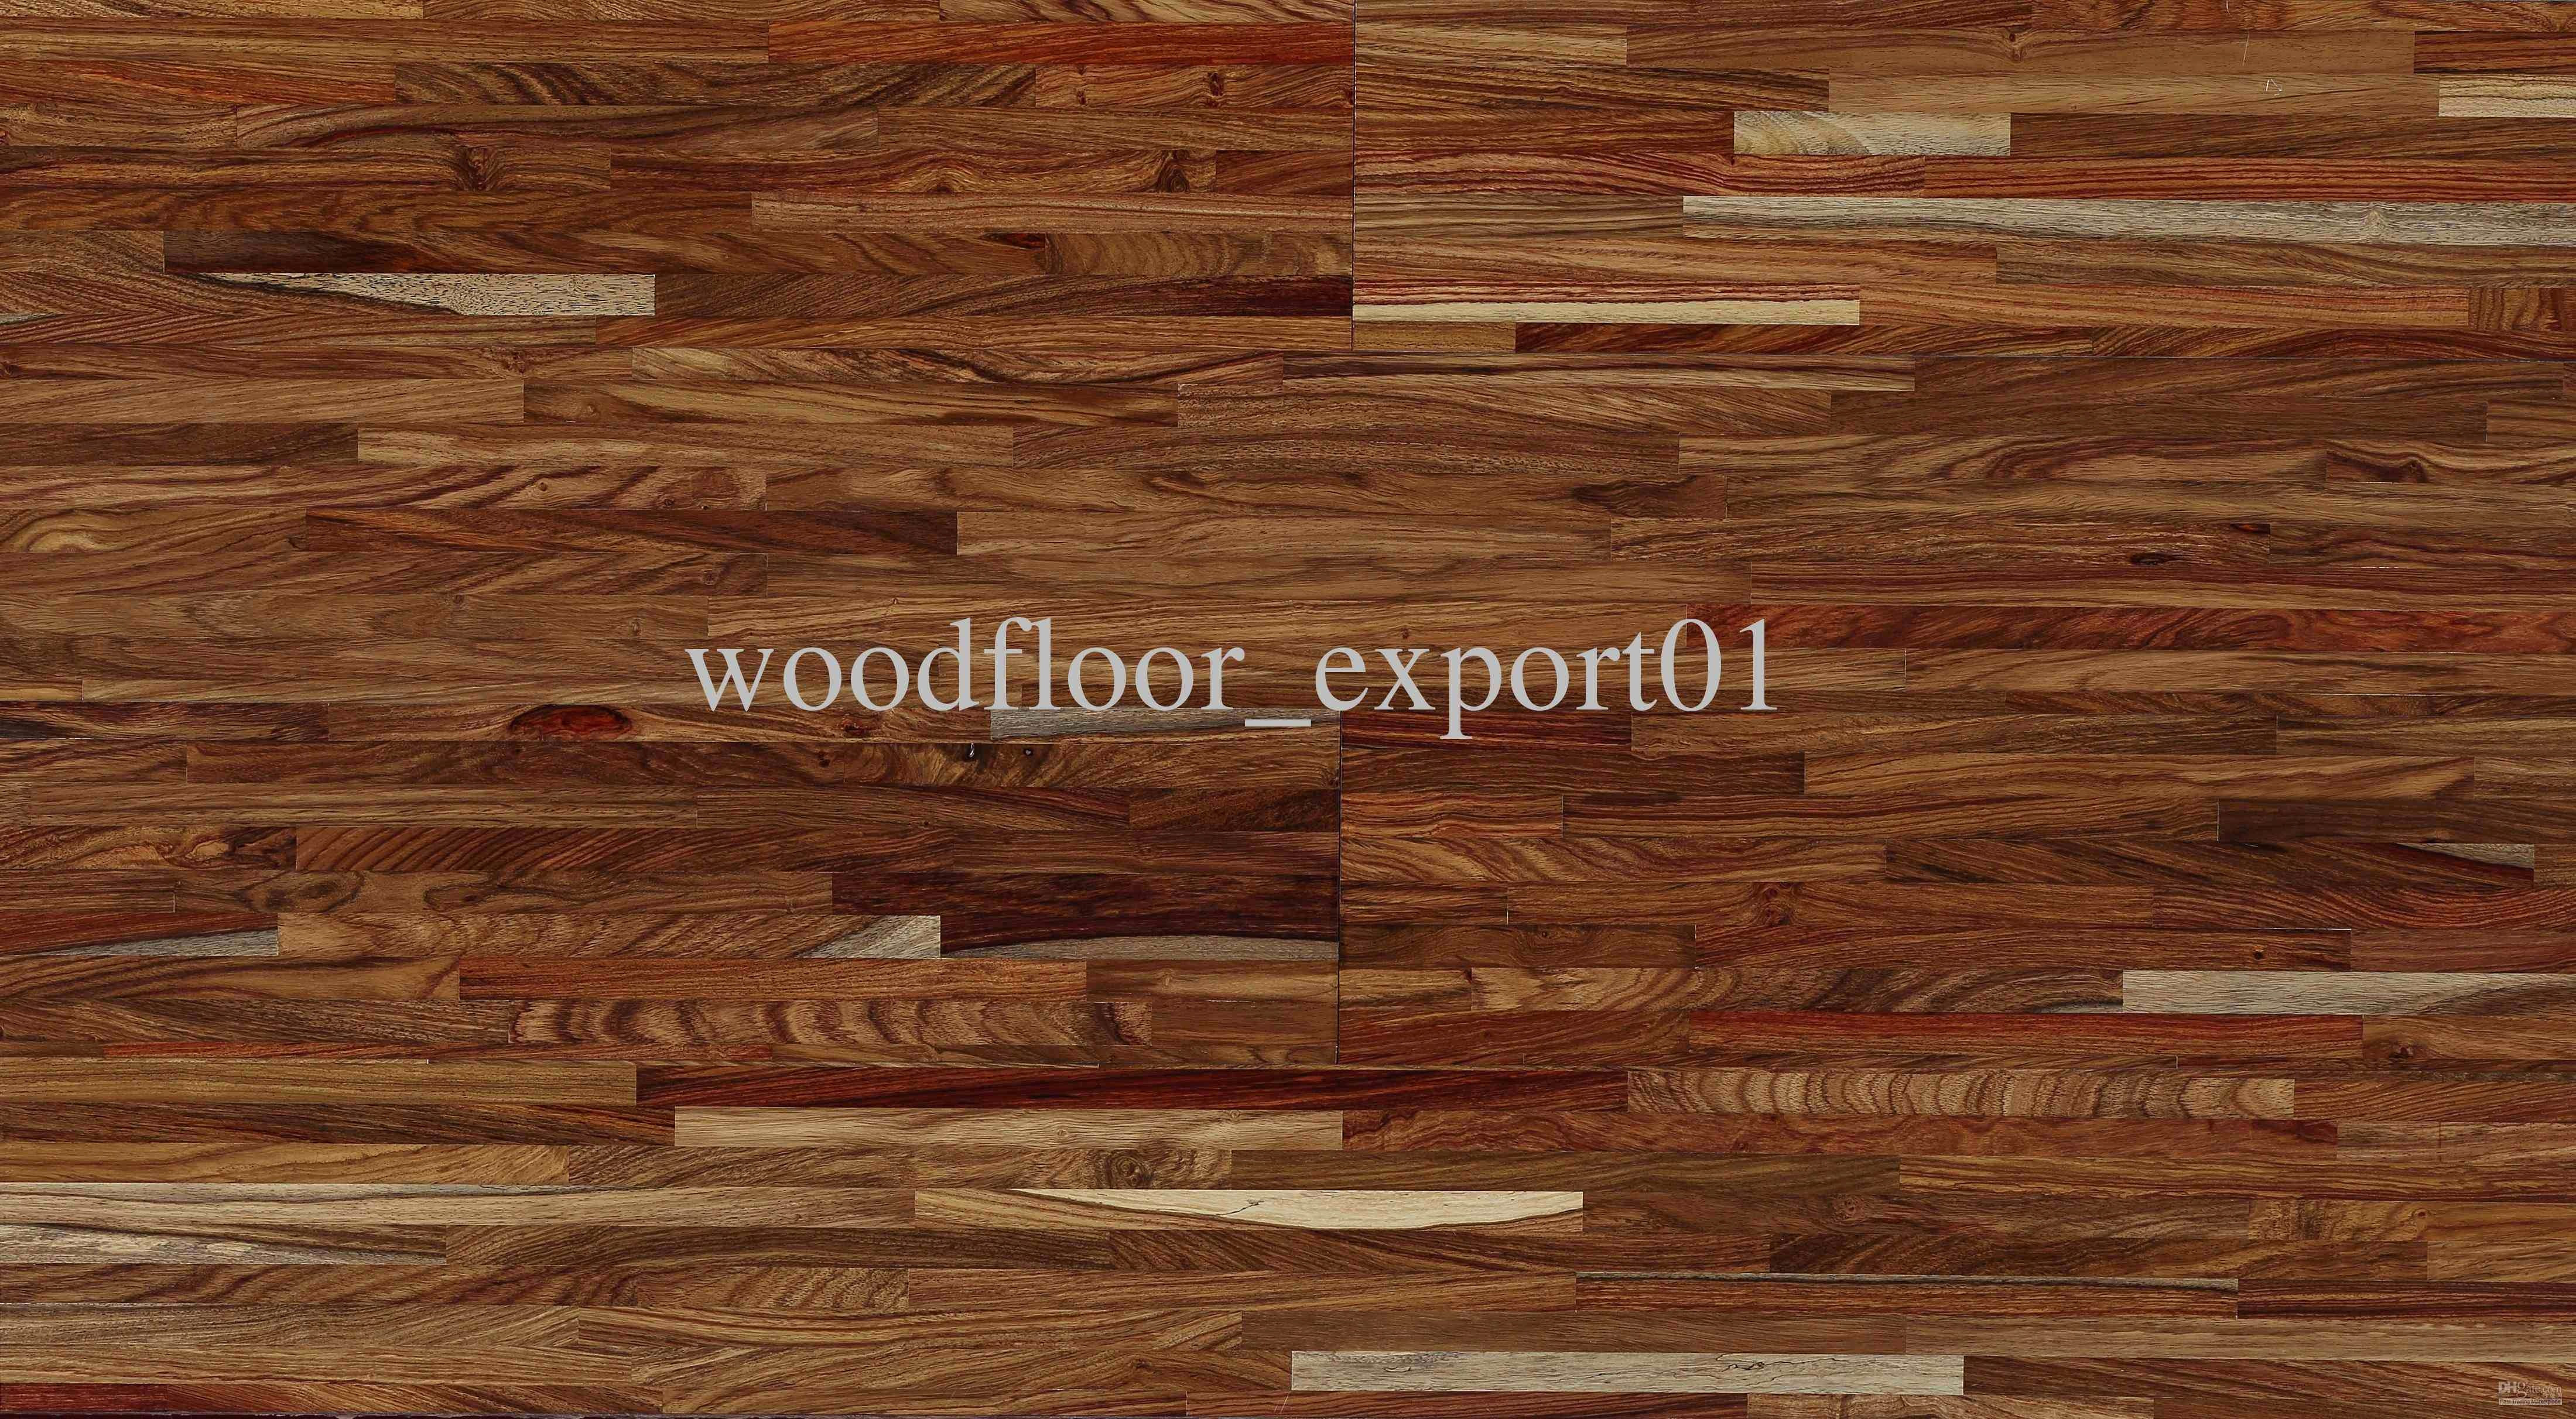 Hardwood Floor Transition to Carpet Of 15 Unique Types Of Hardwood Flooring Image Dizpos Com with Types Of Hardwood Flooring Awesome 50 Inspirational Sanding and Refinishing Hardwood Floors Graphics Image Of 15